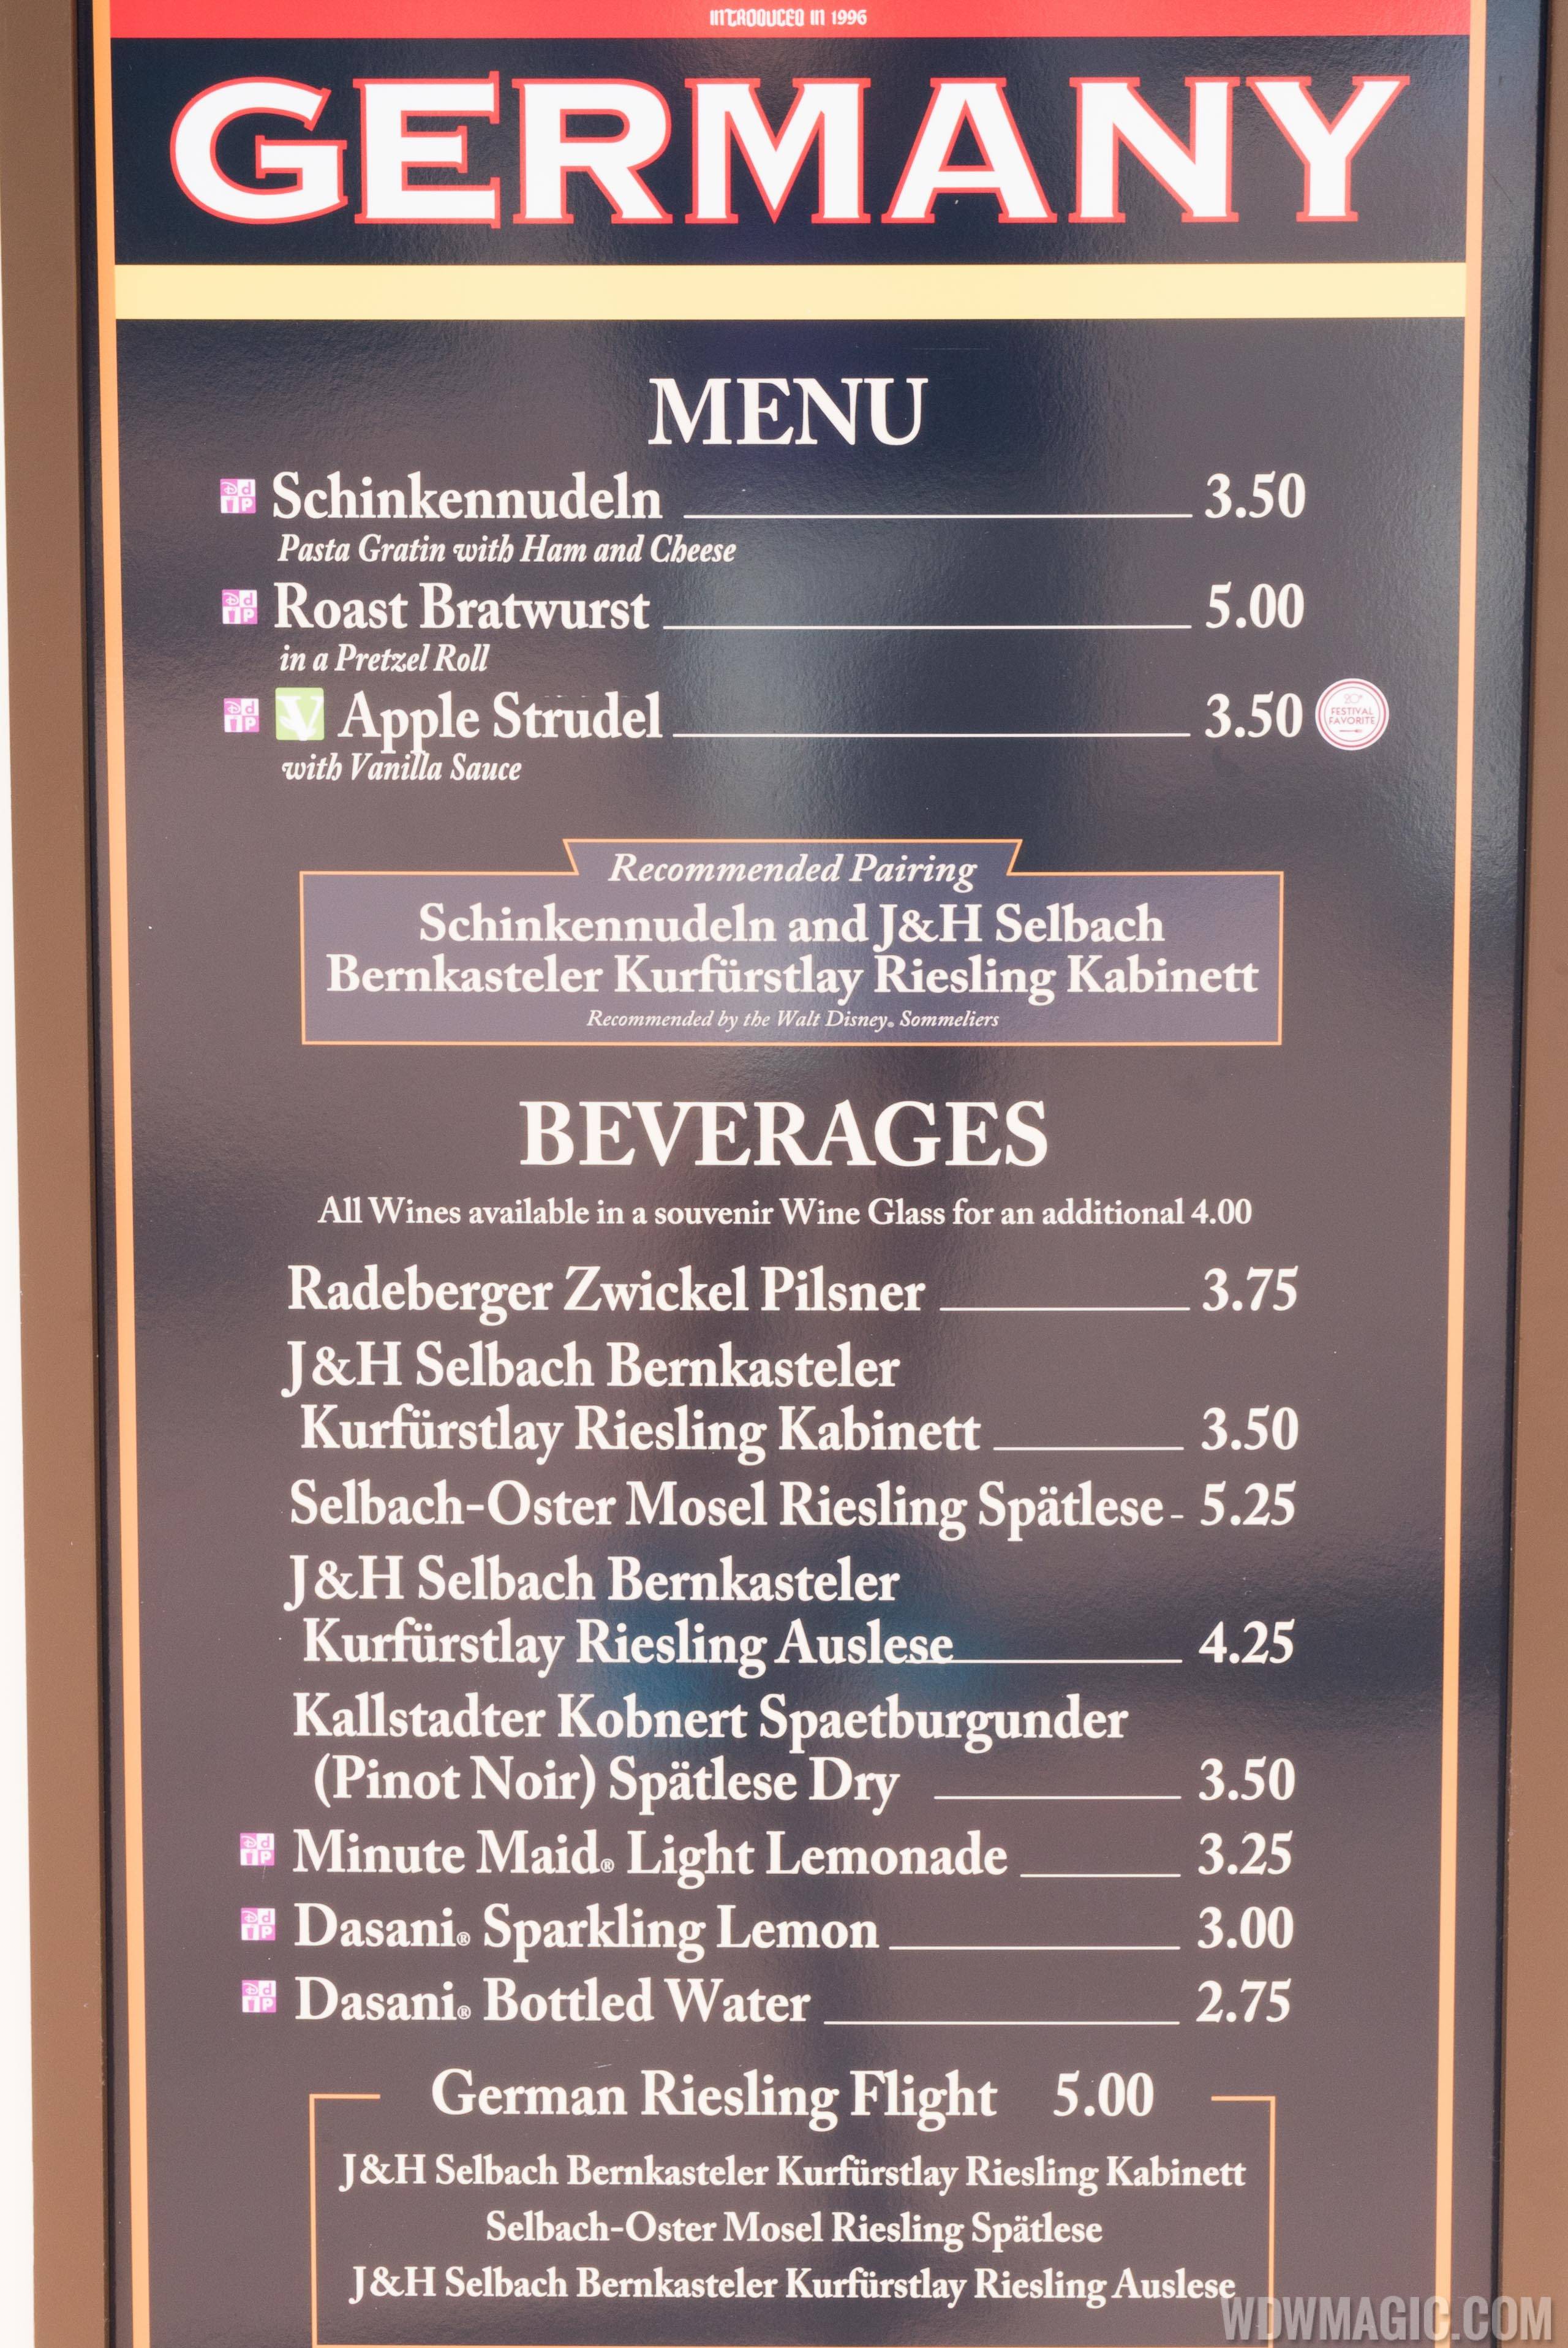 2015 Epcot Food and Wine Festival Marketplace kiosk - Germany menu